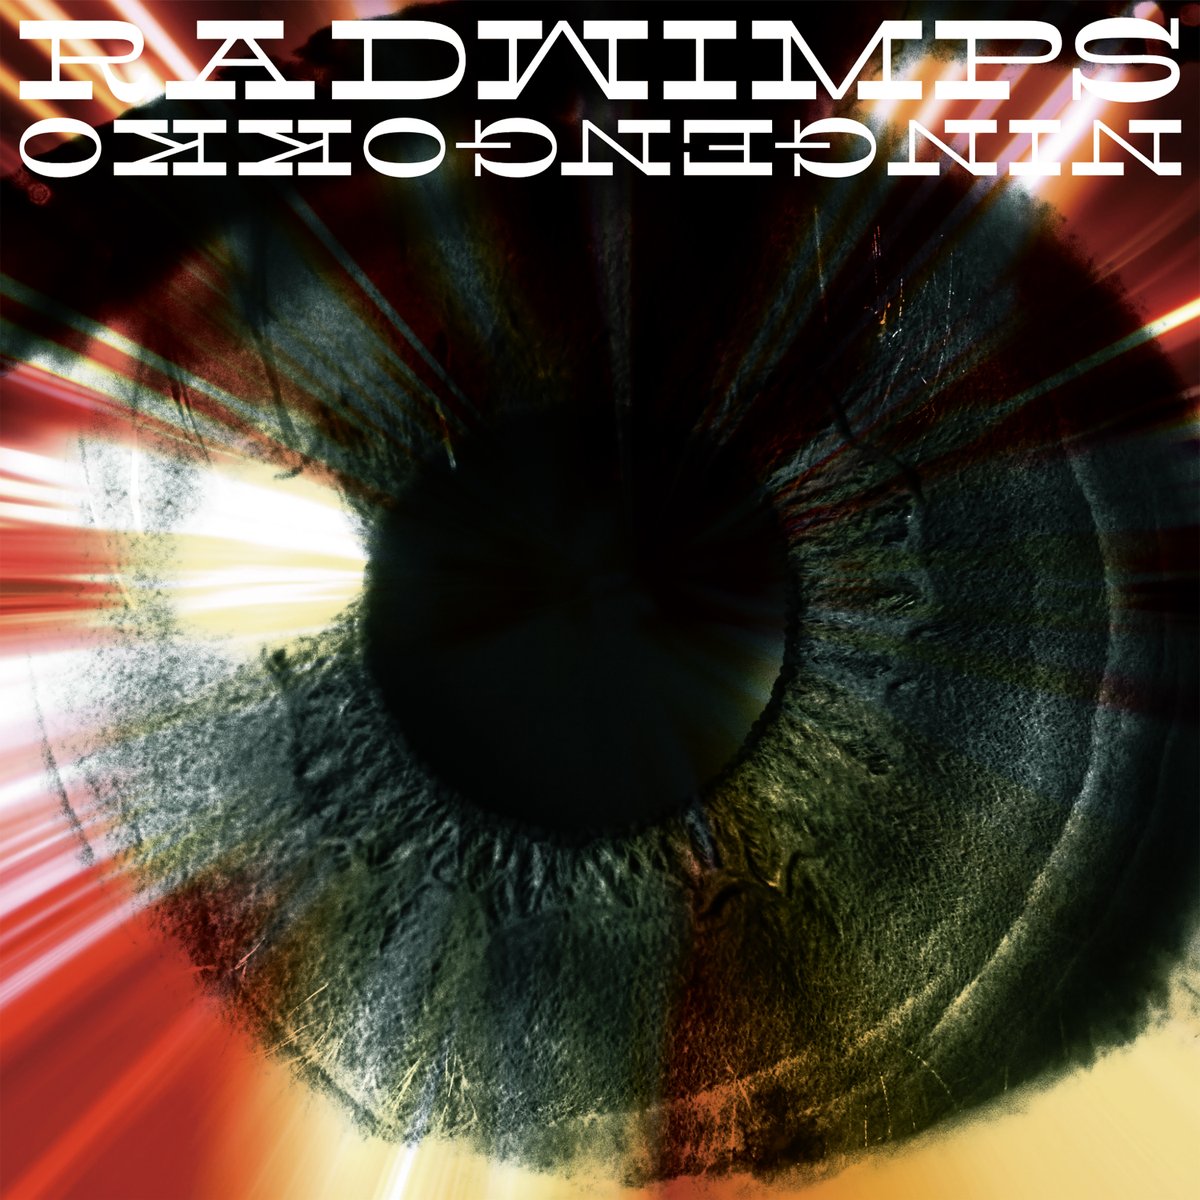 Cover art for『RADWIMPS - 人間ごっこ』from the release『NINGEN GOKKO